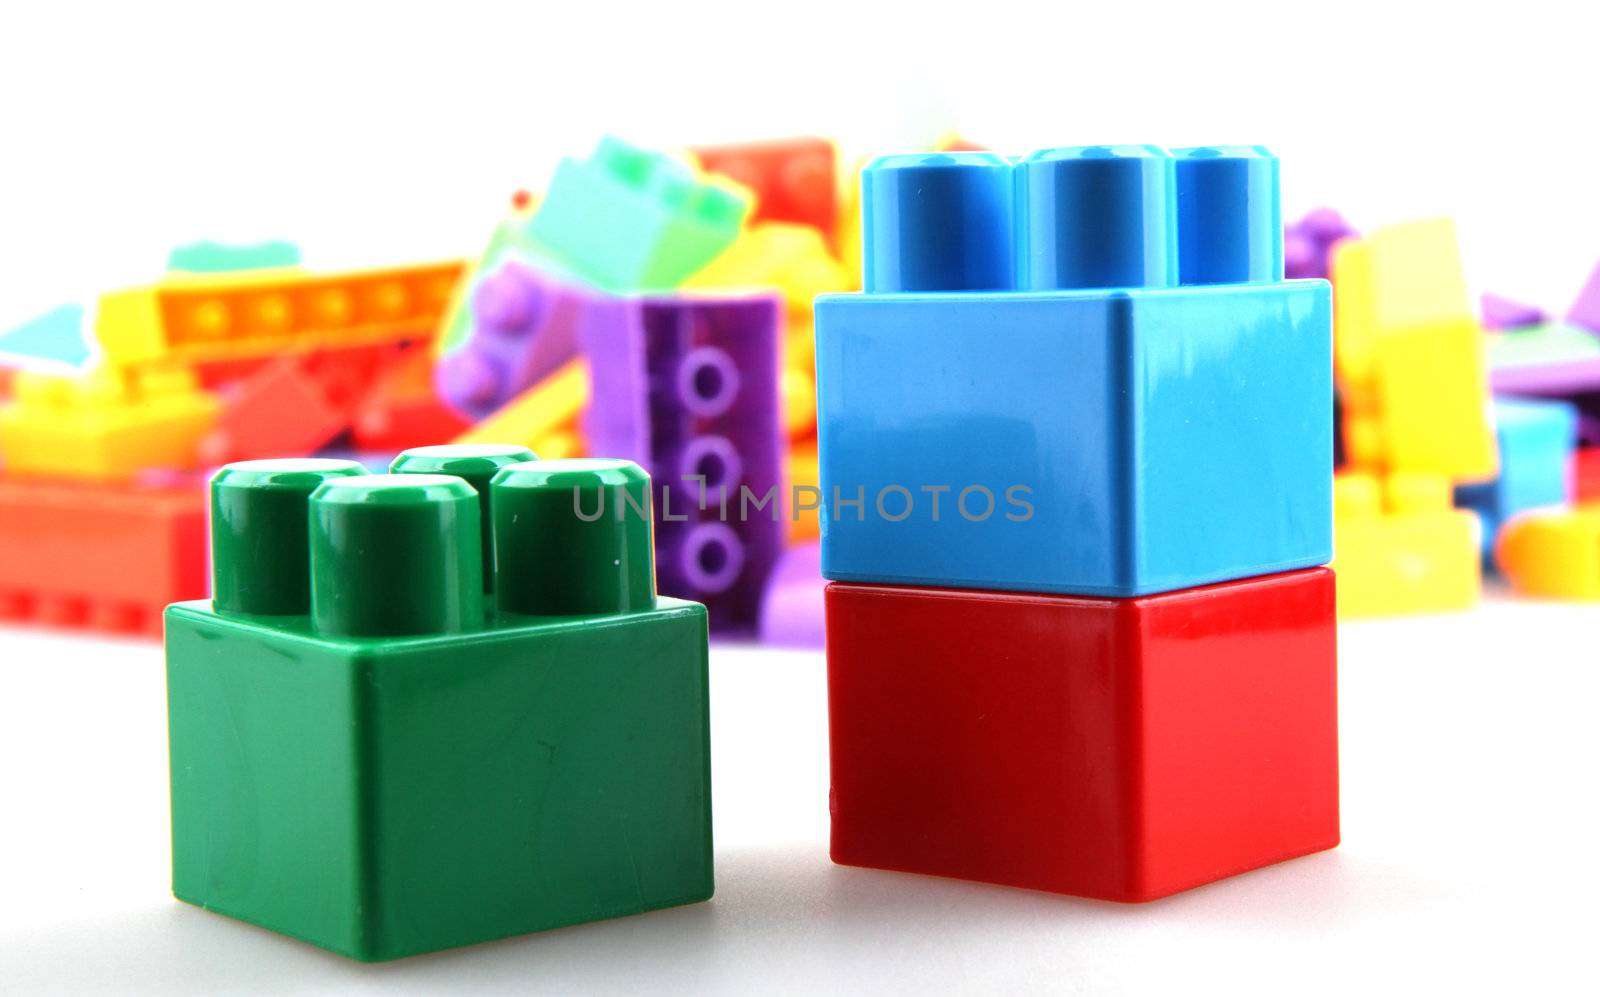 Plastic building blocks by nenov